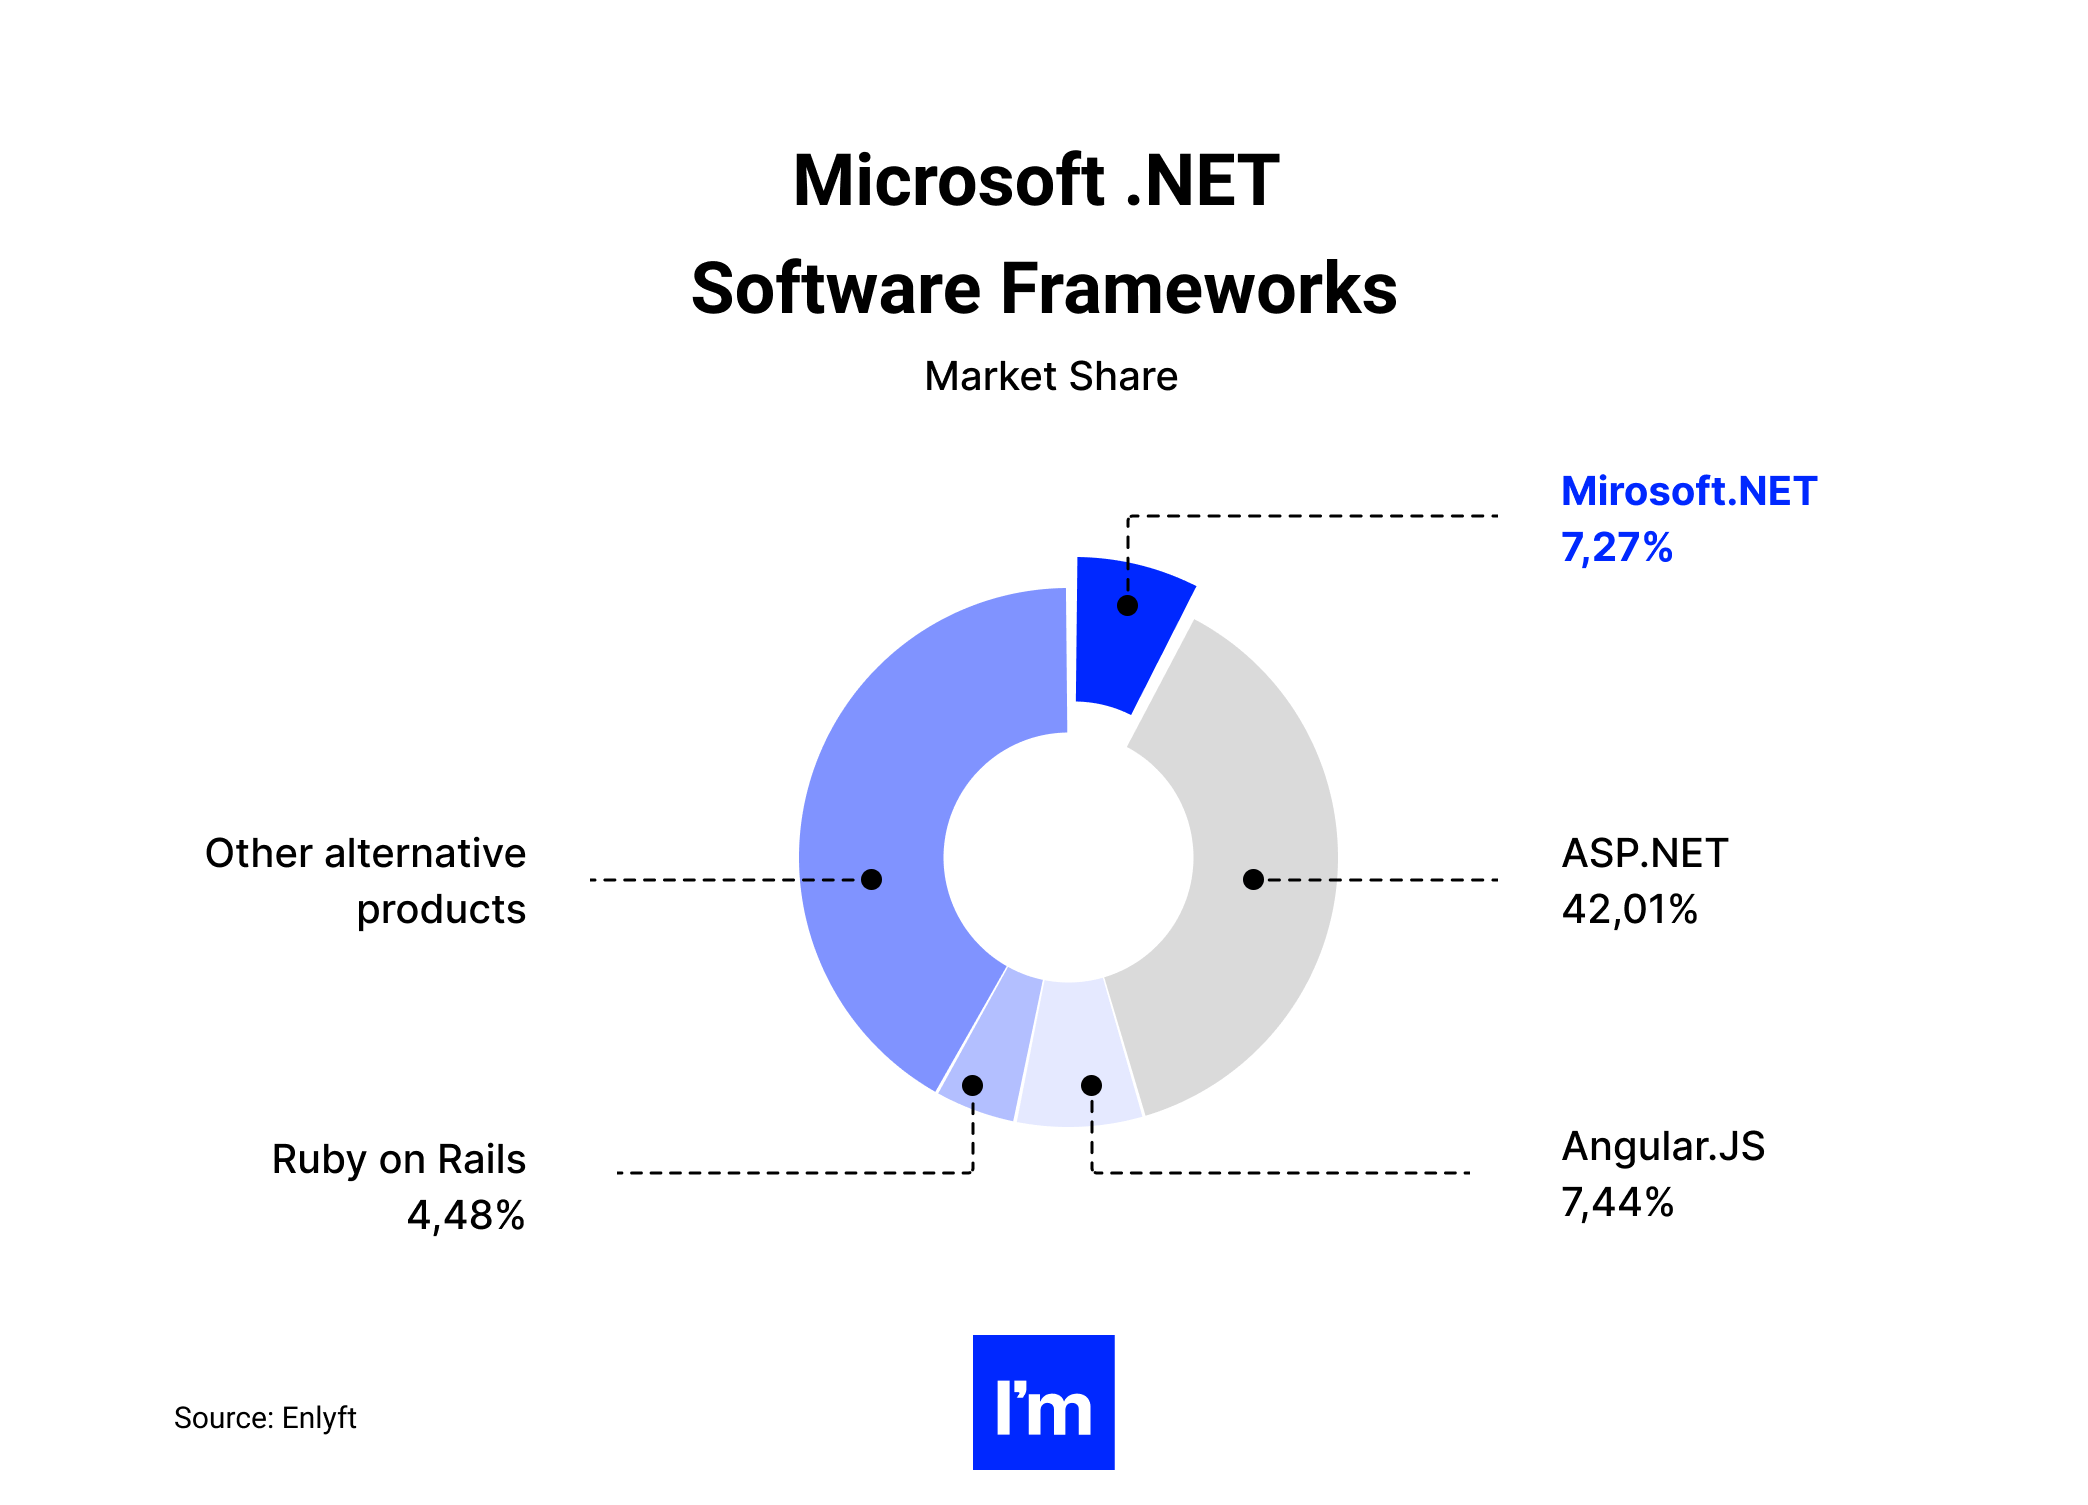 net framework development